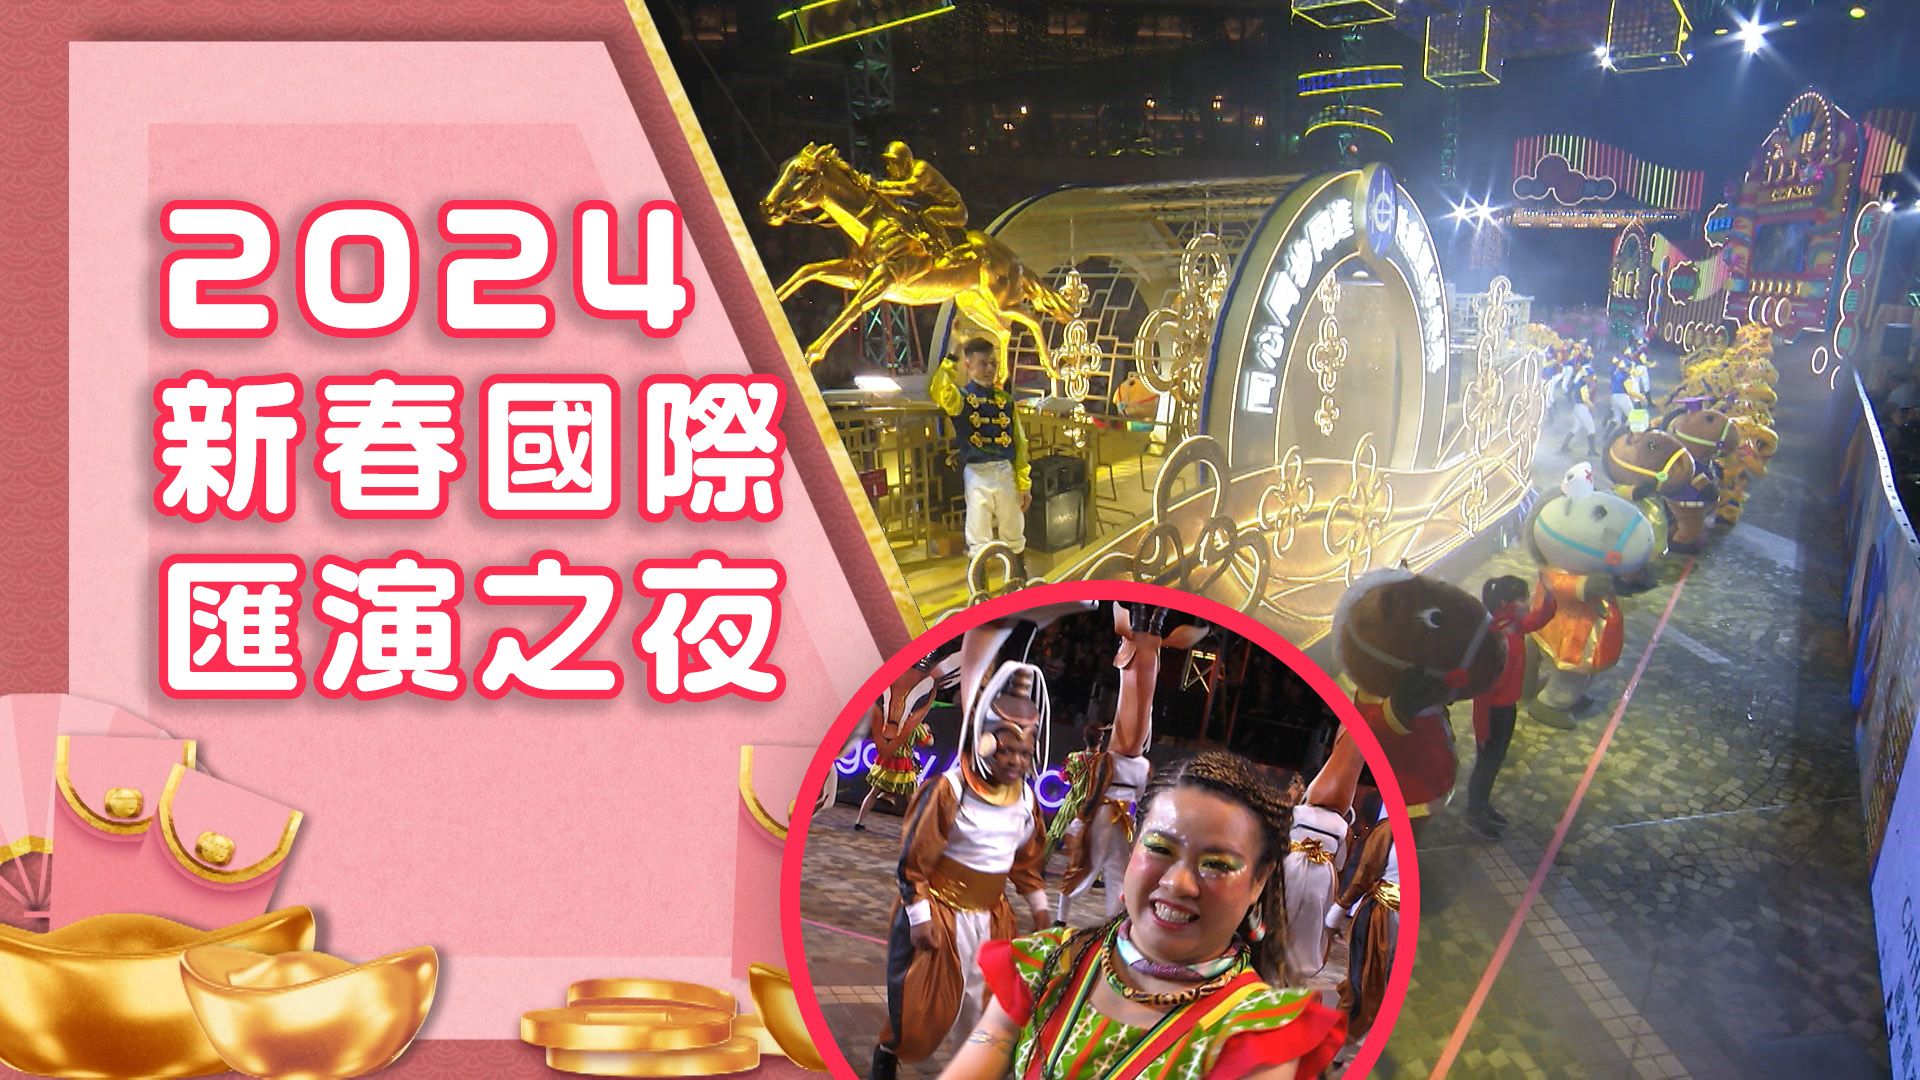 2024新春國際匯演之夜-International Chinese New Year Night Parade